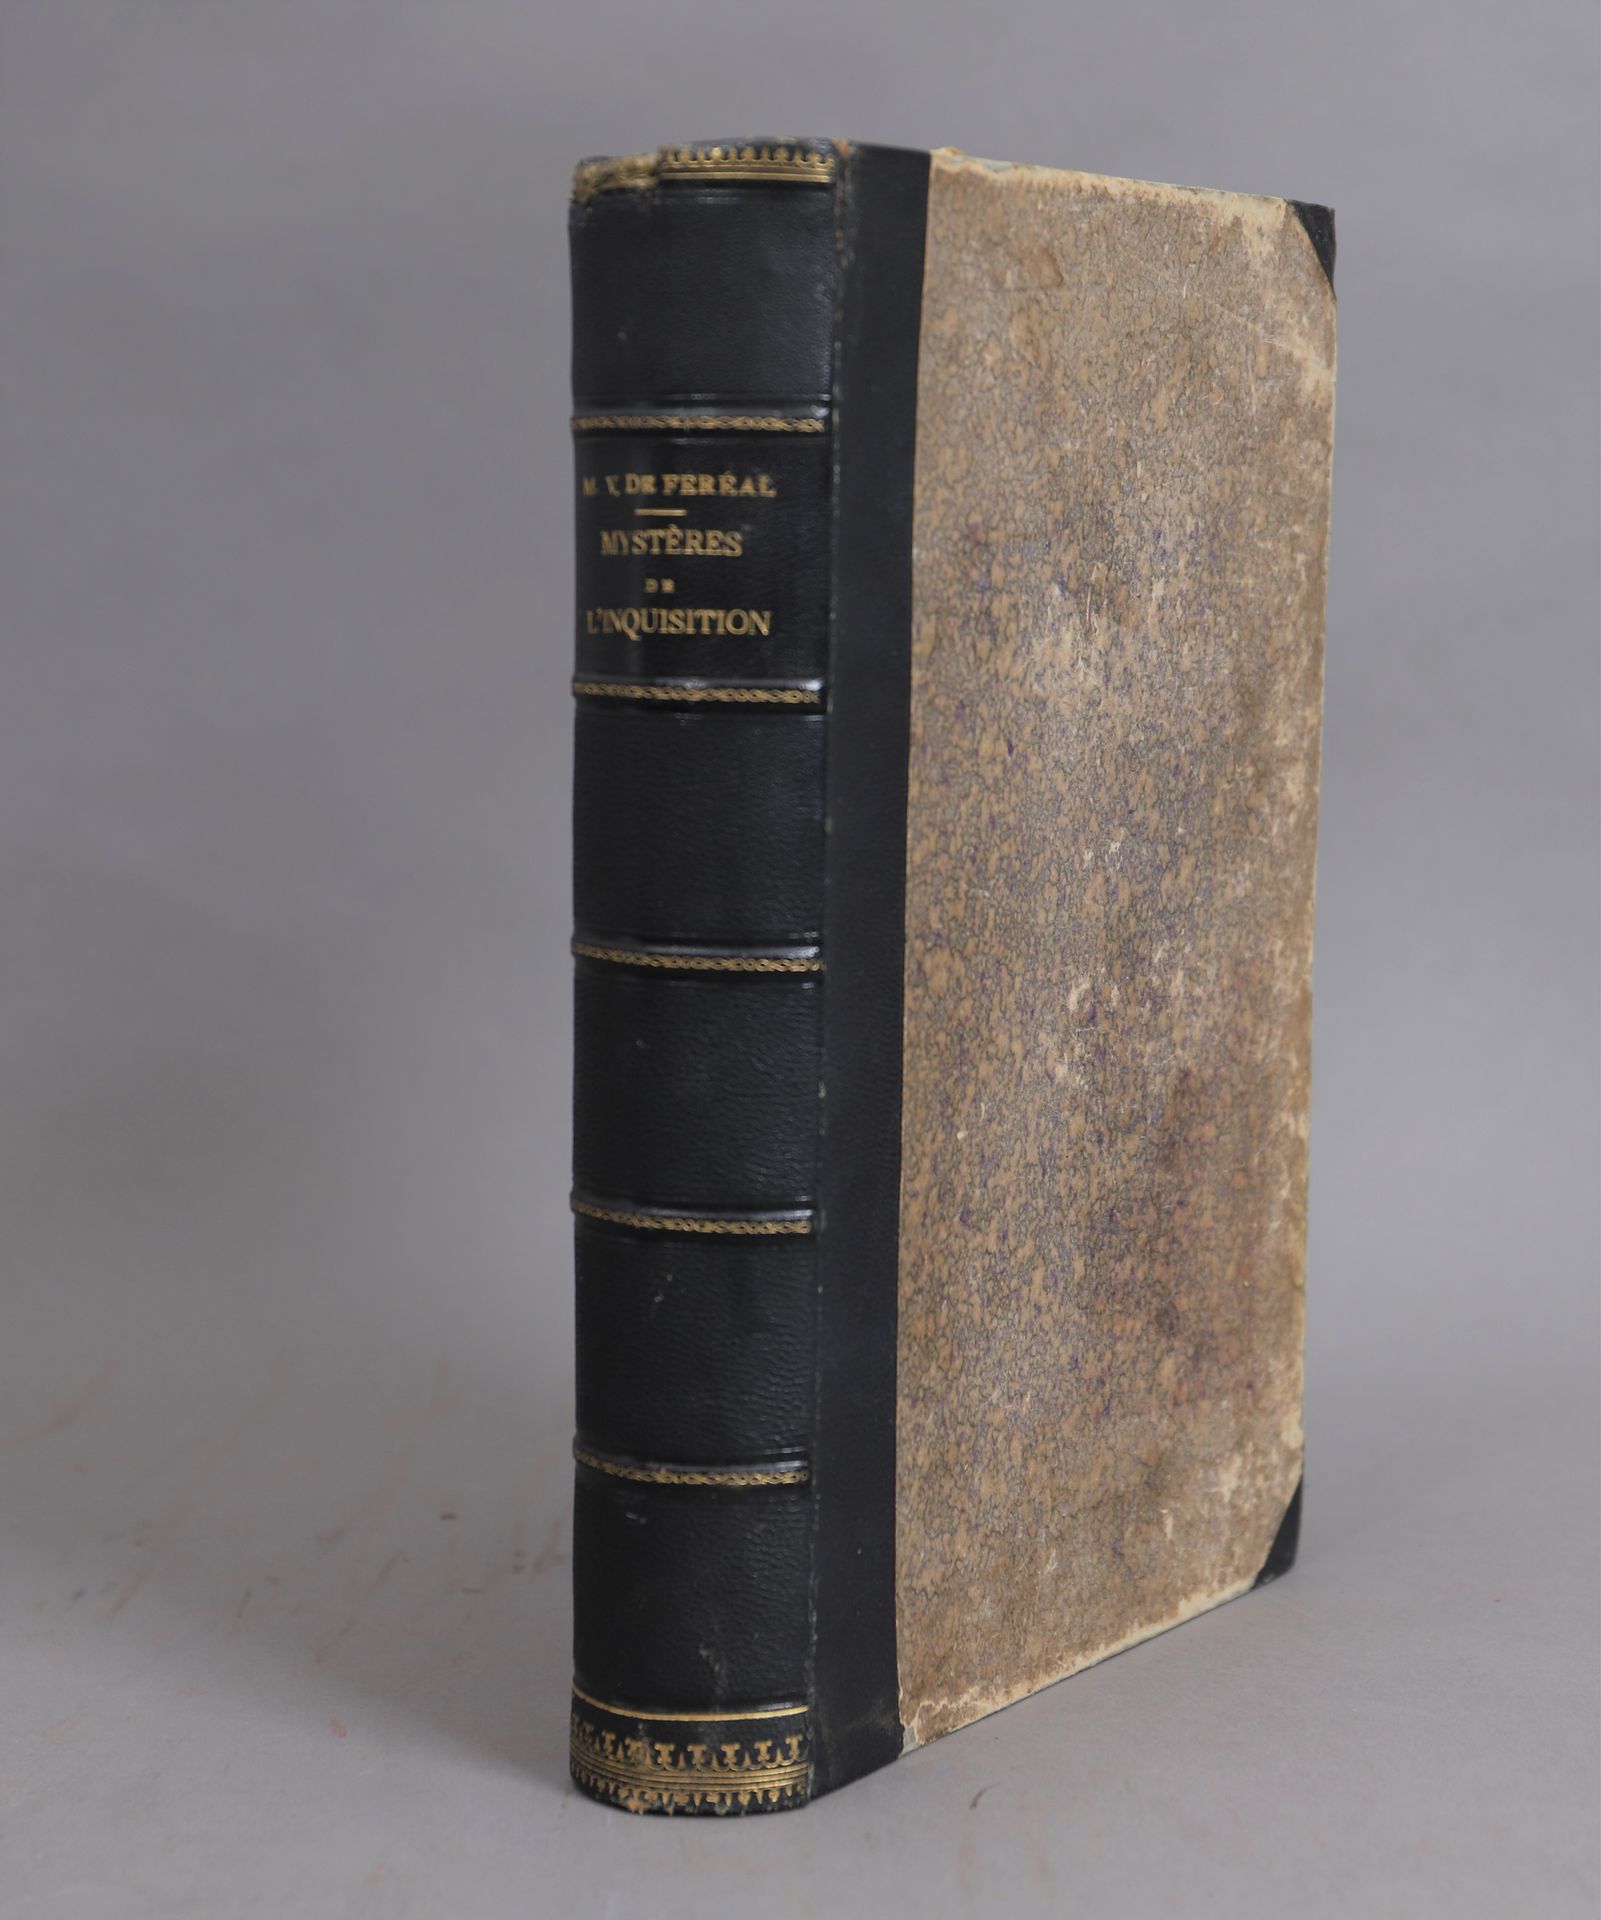 Null MYSTERES of INQUISITION. 

Paris 1845

Bound volume.